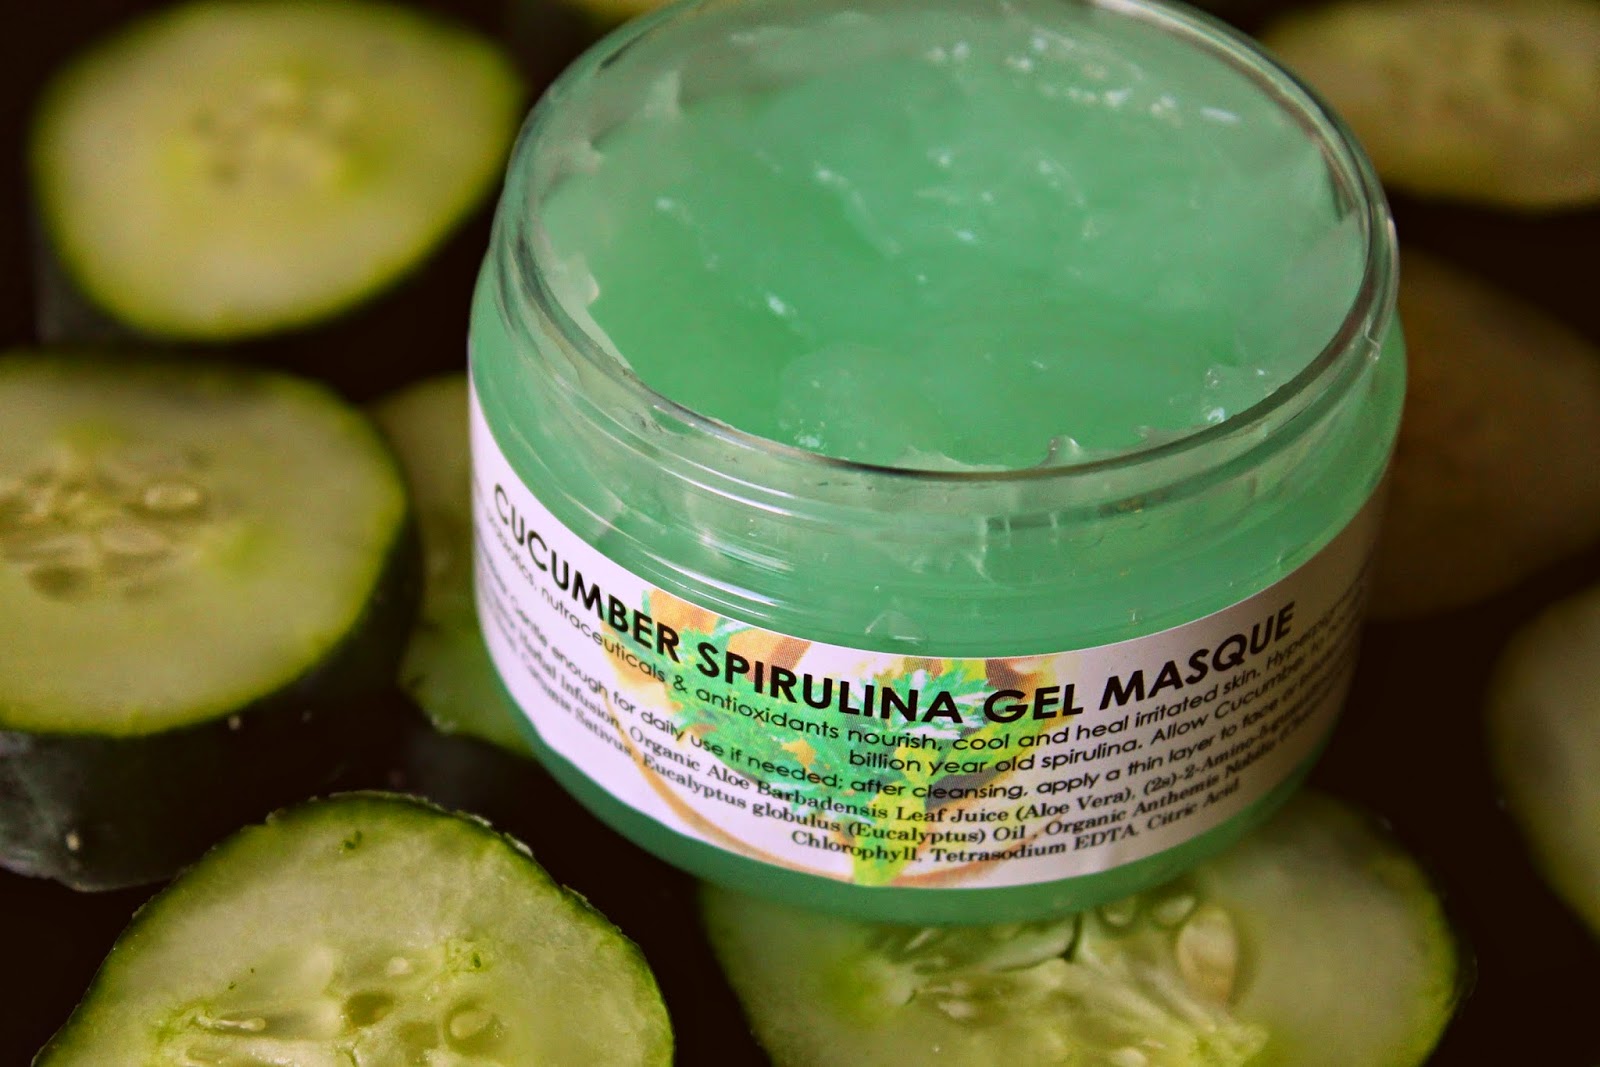 livia Cucumber Spirulina Gel Masque Giveaway